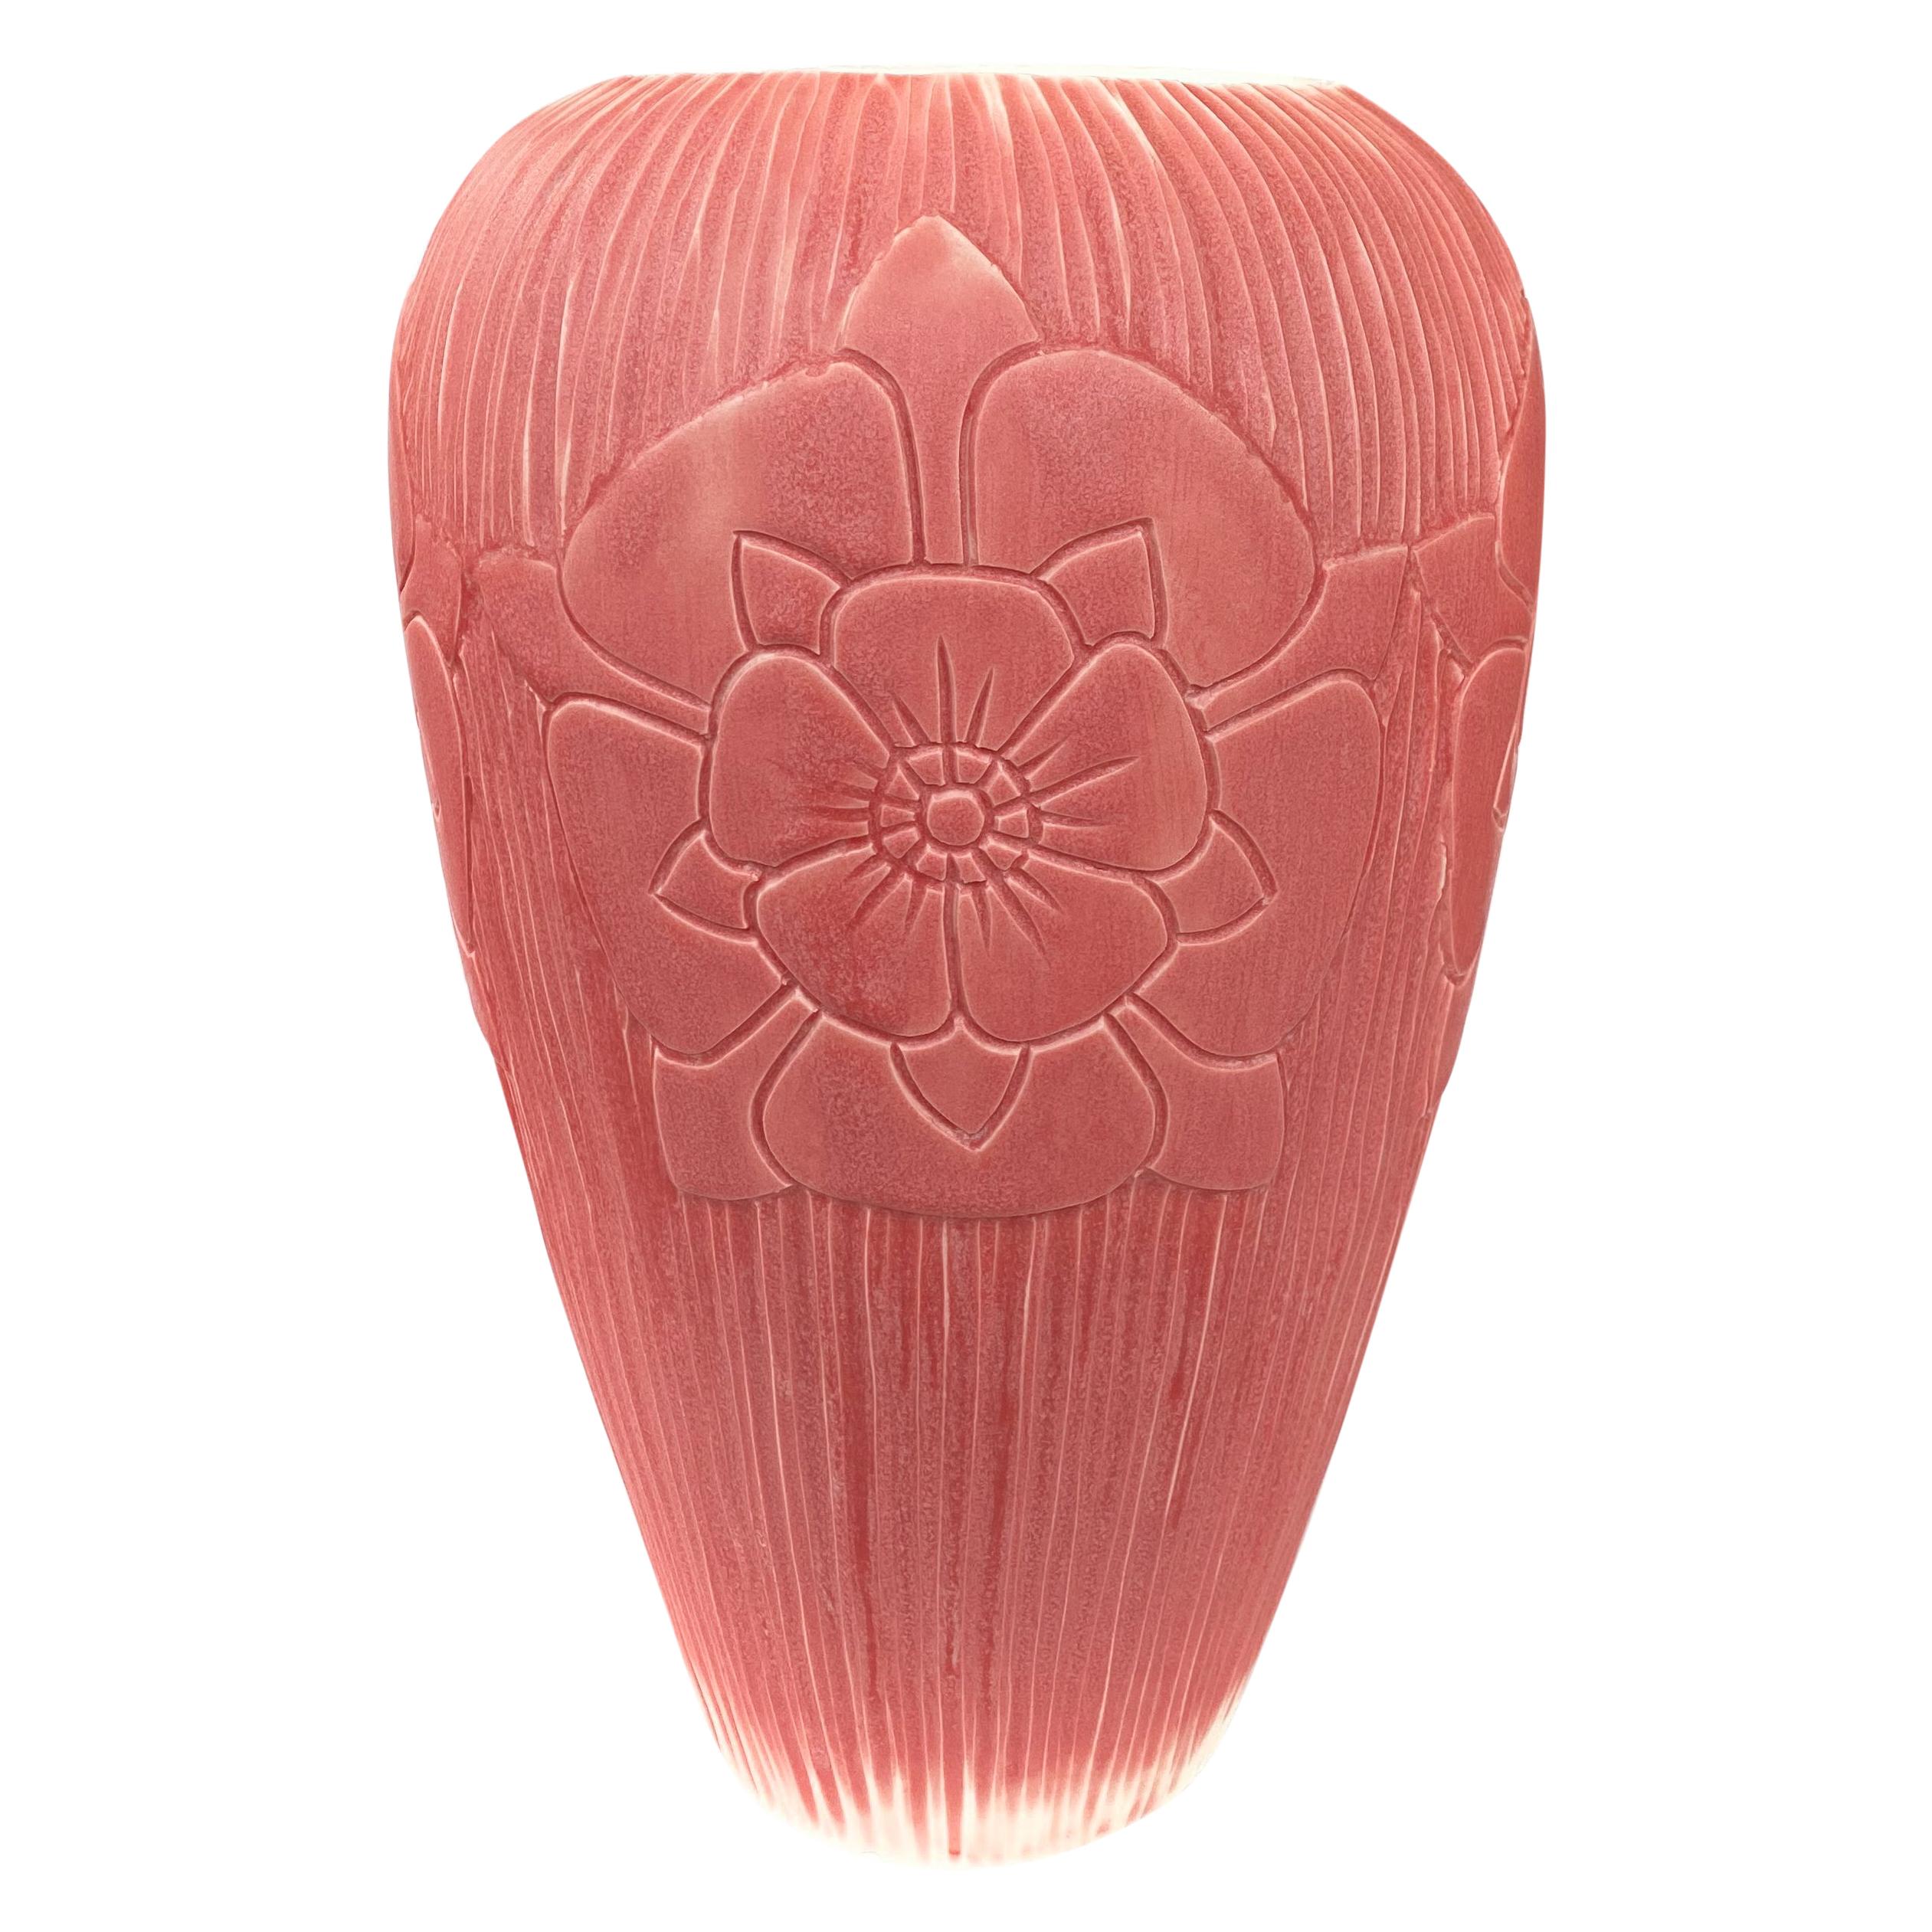 Ruby "English Rose" Hand Carved Porcelain Arts & Crafts Pottery Vase For Sale